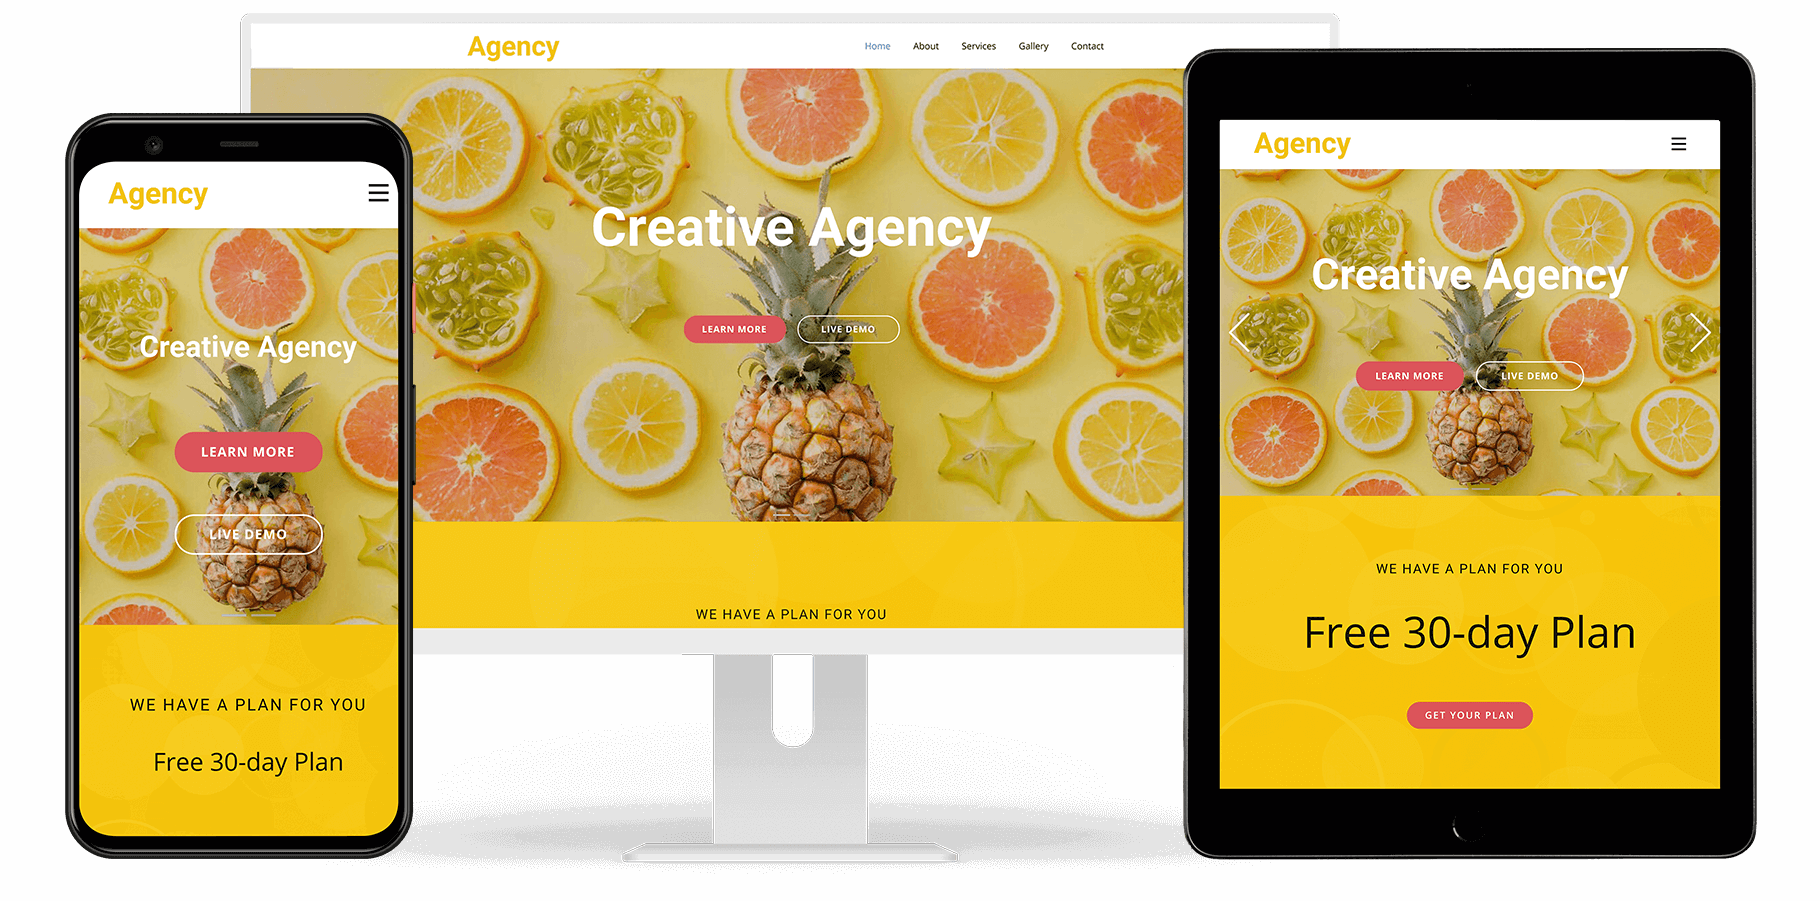 Agency Display